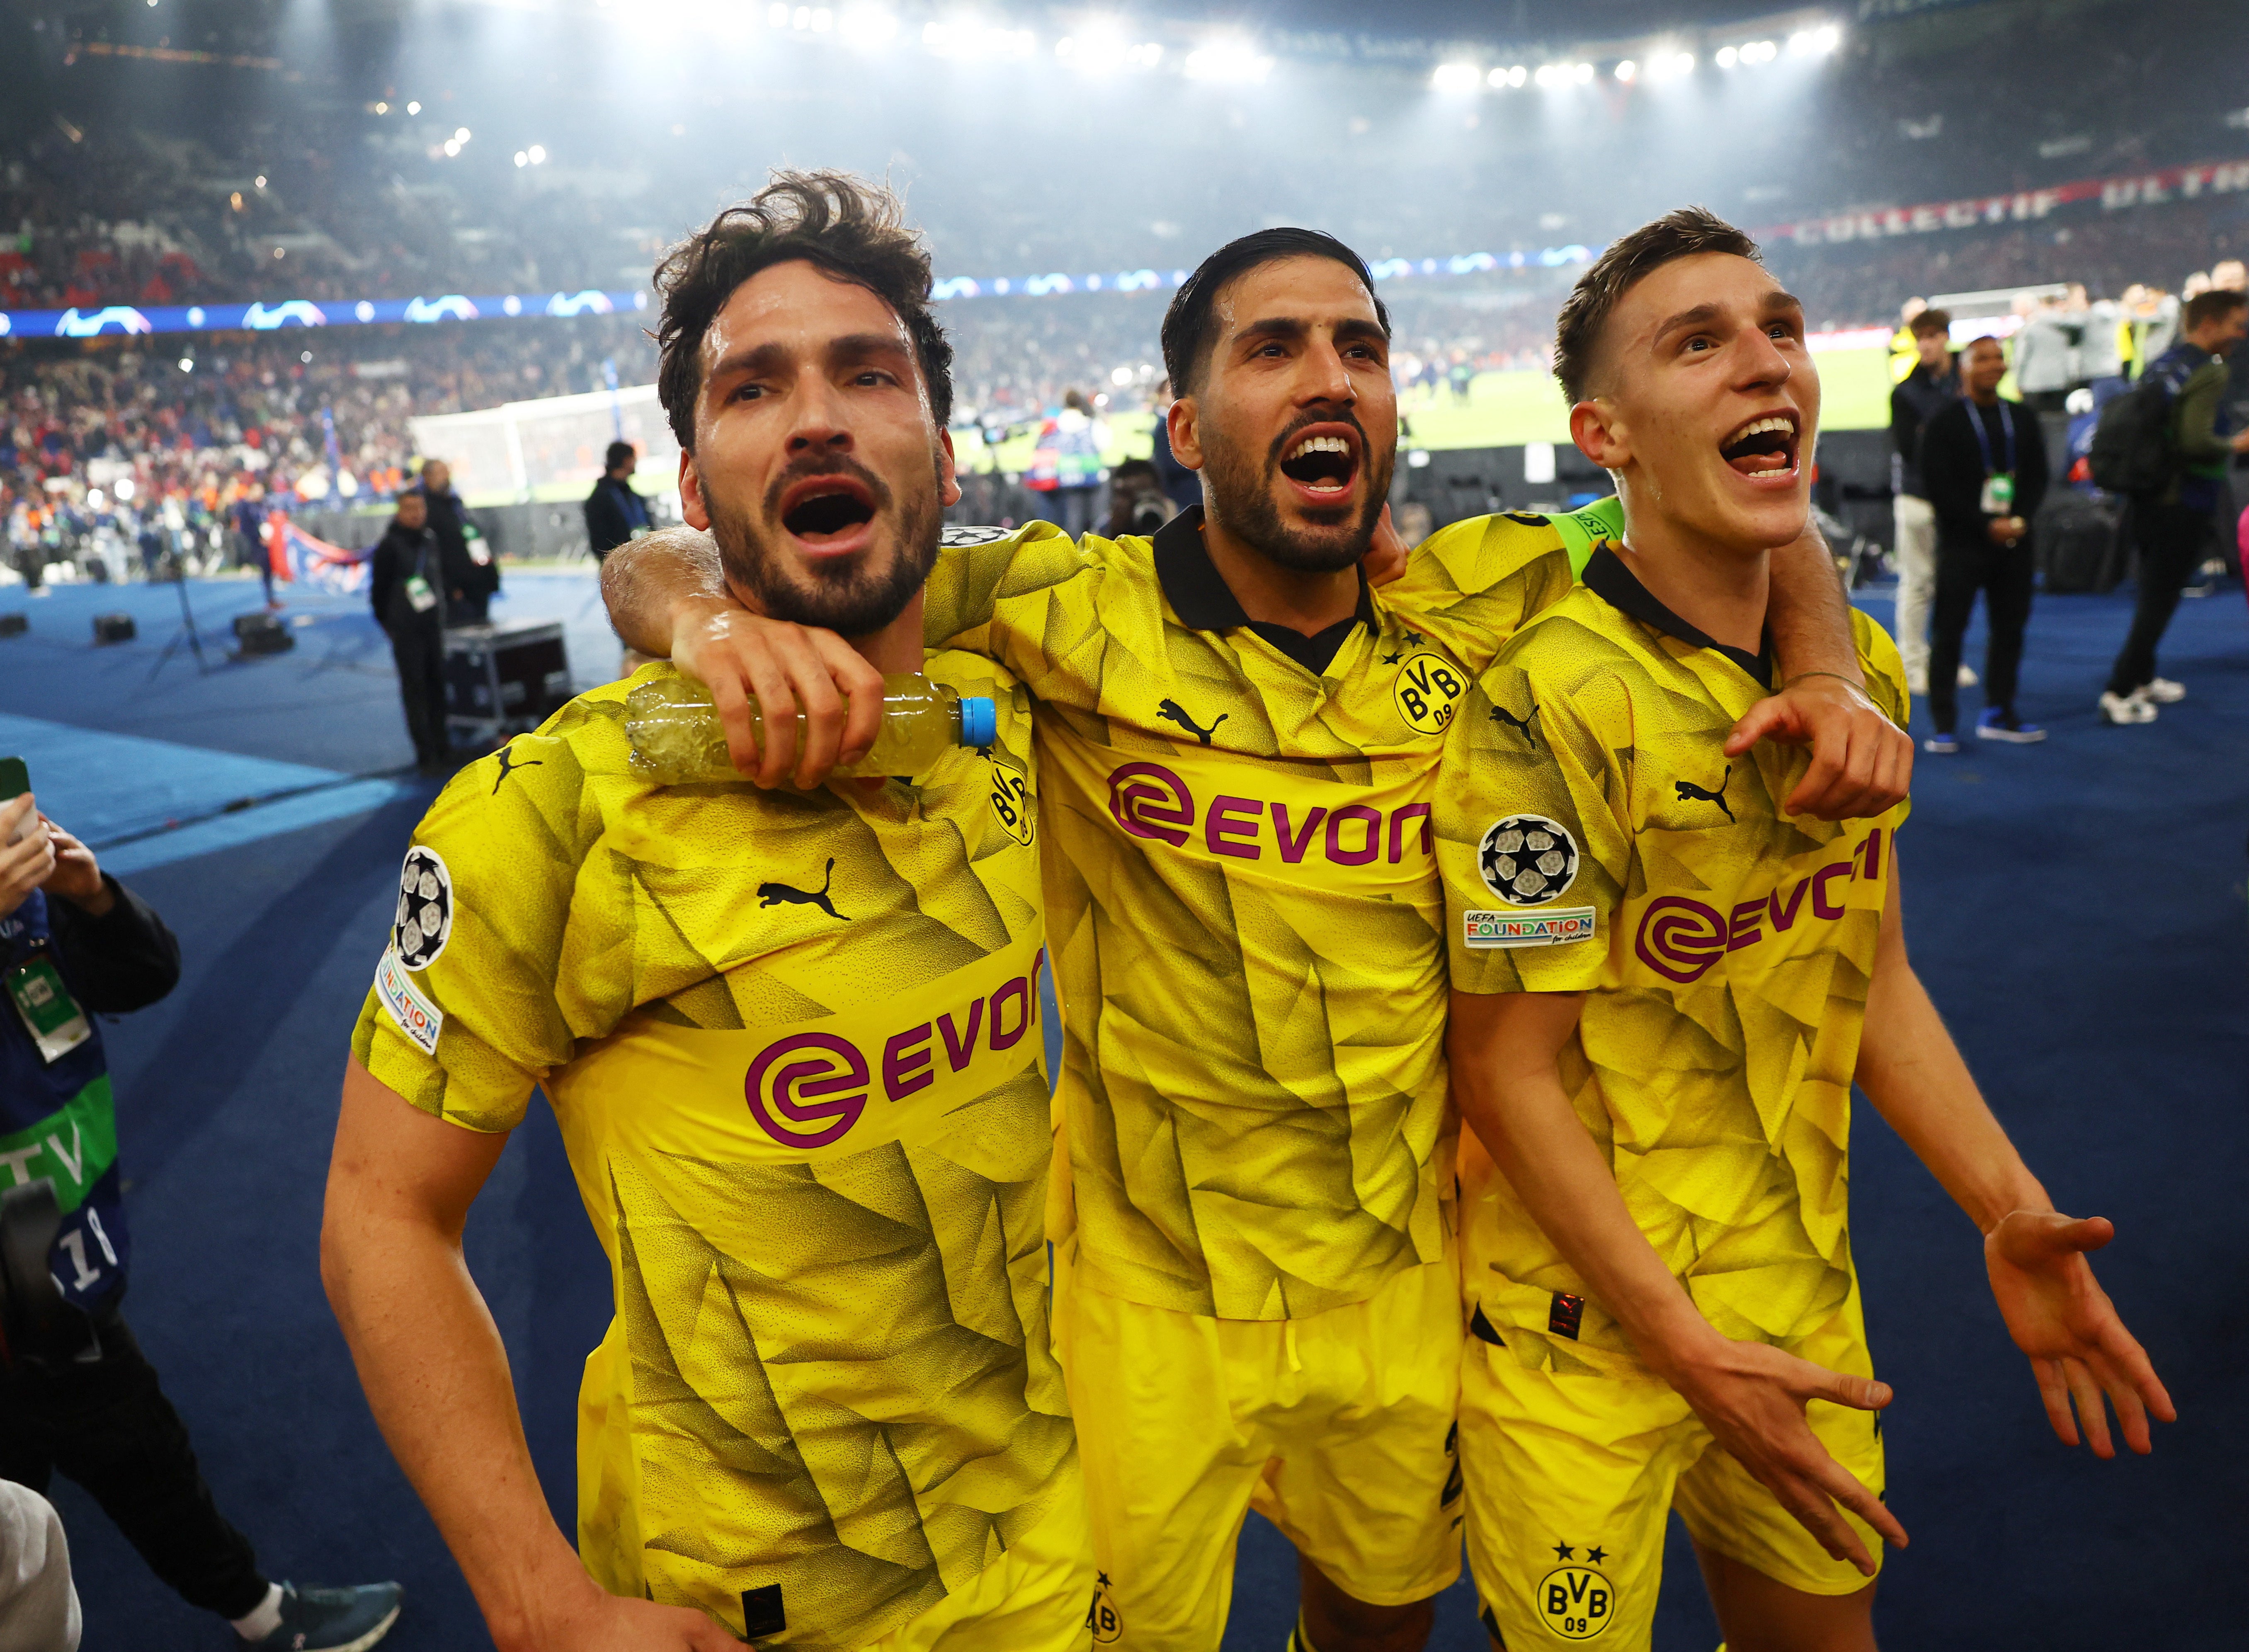 Borussia Dortmund will be underdogs heading into Saturday’s Champions League final